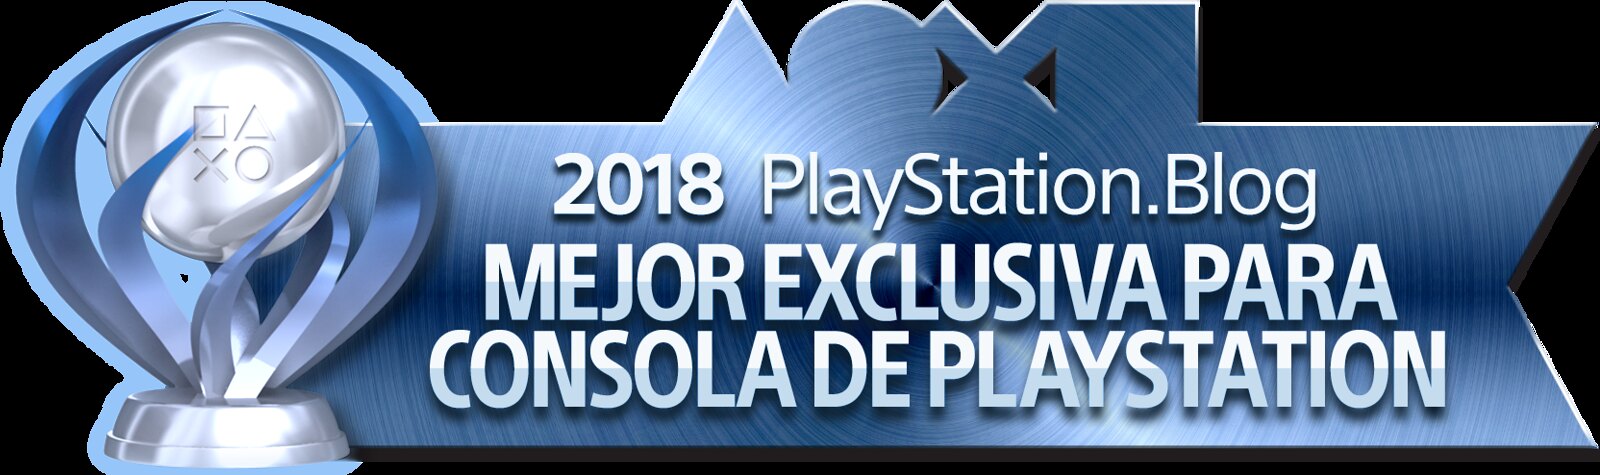 Best PlayStation Console Exclusive - Platinum